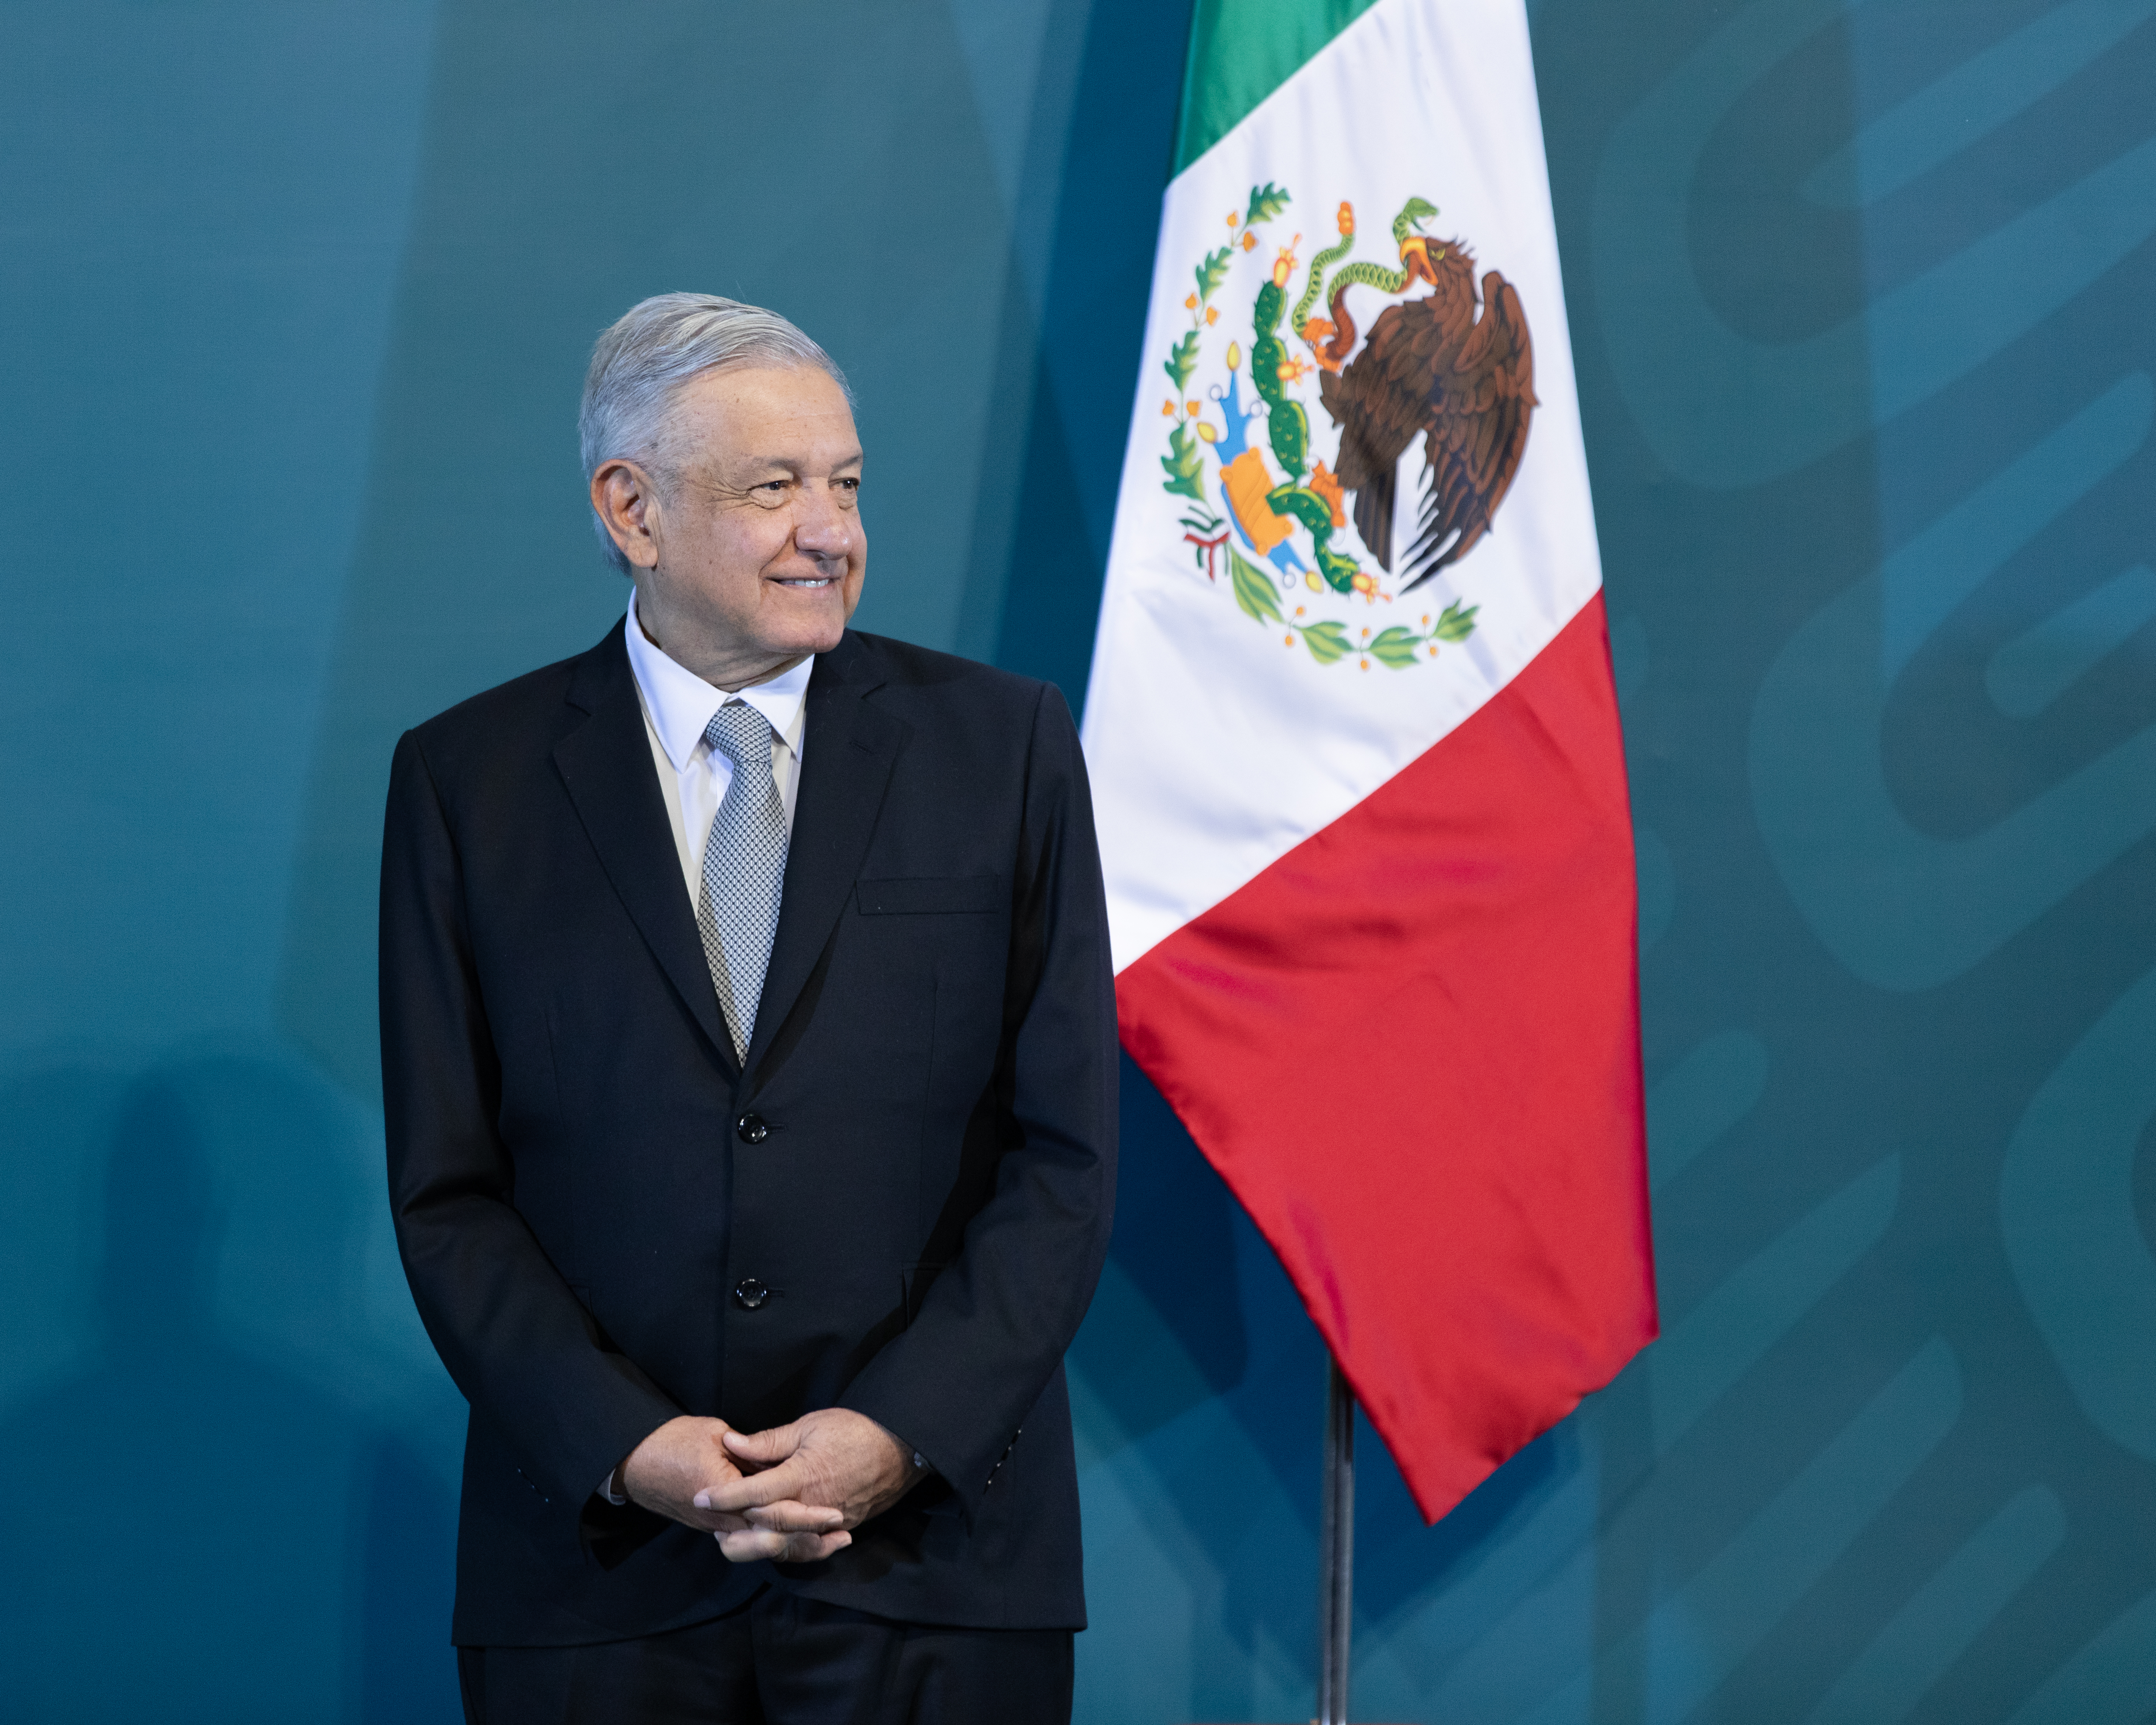 President Andrés Manuel López Obrador of Mexico (photo credit: Eneas De Troya/flickr)